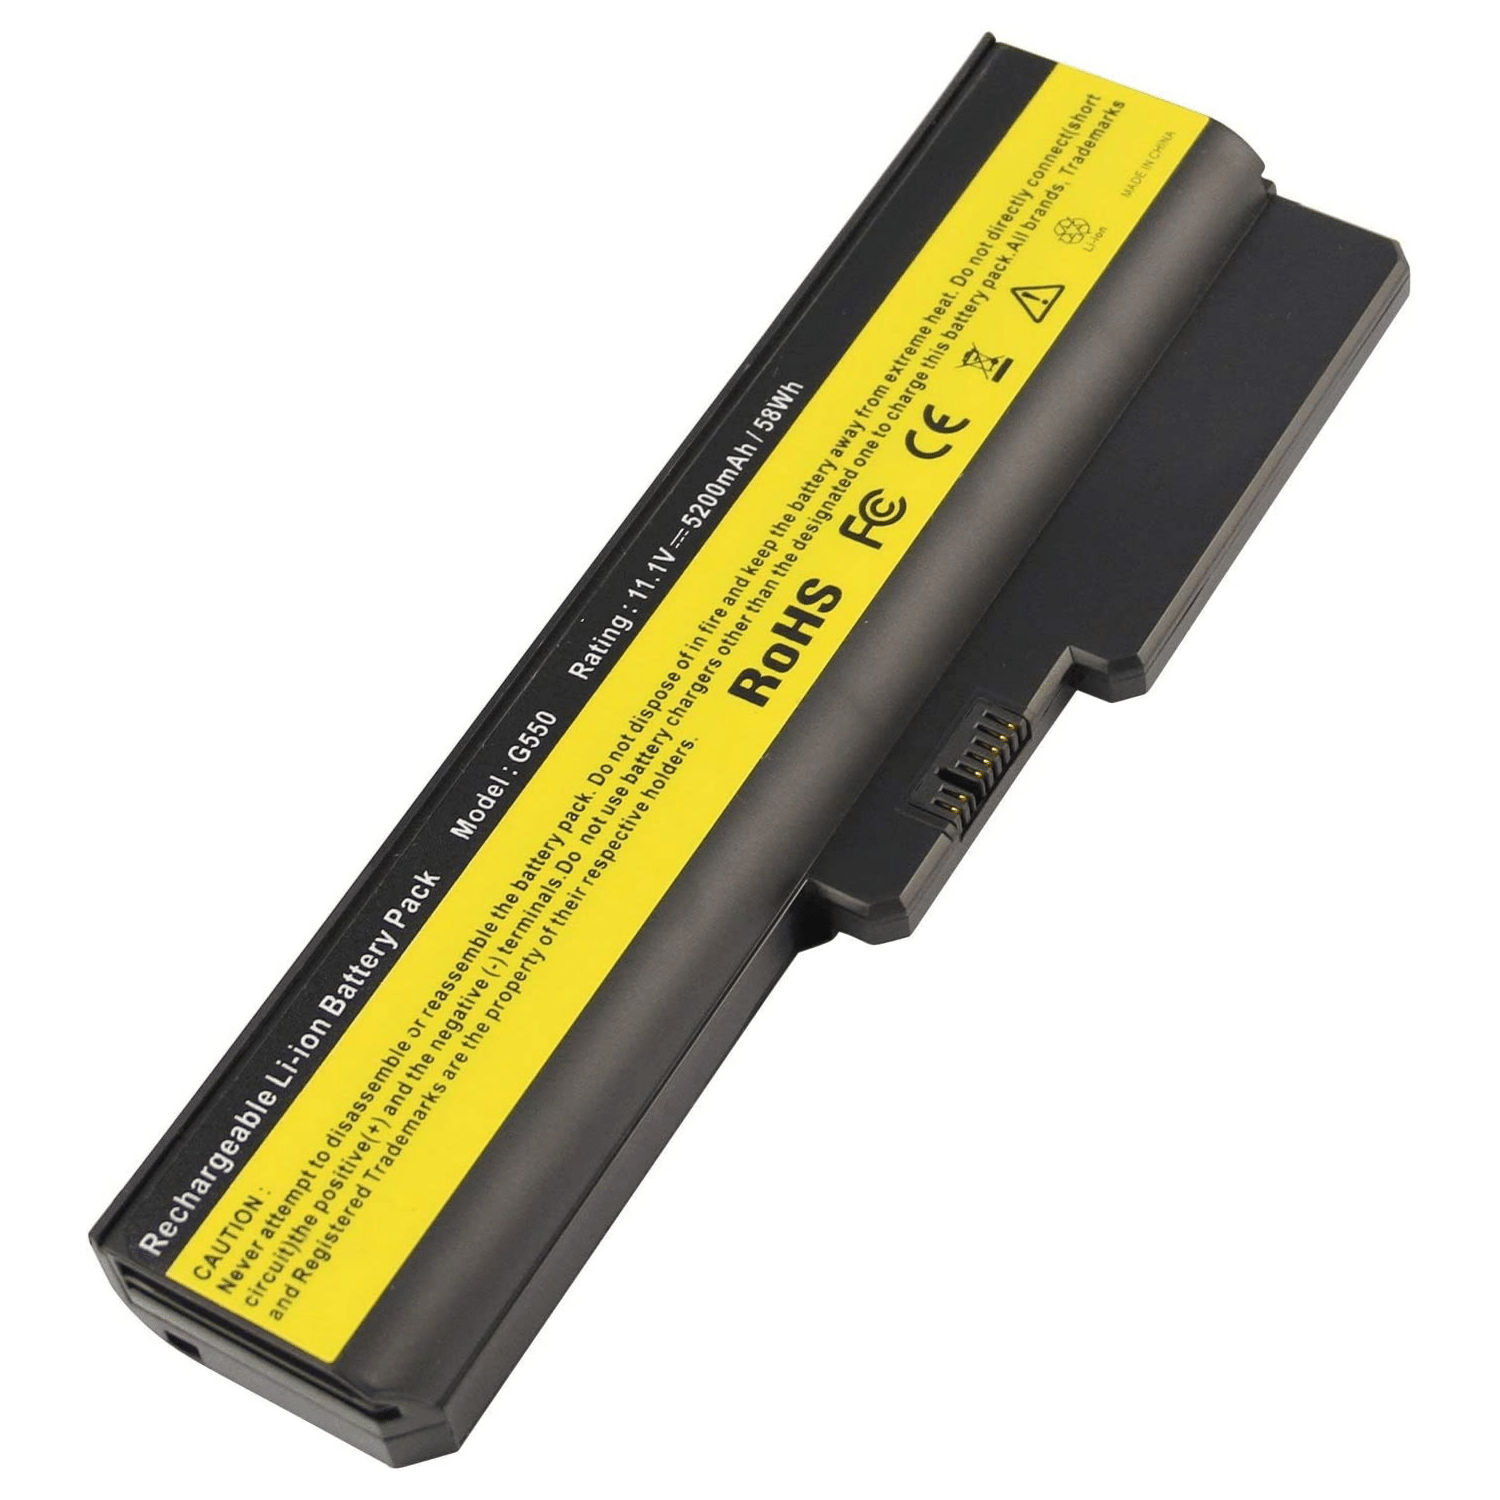 Lenovo 3000 G430 Battery For IdeaPad G450 G530 G550 B460 B550 Z360 N500 V460 Z360 2958LFU Series laptop's.